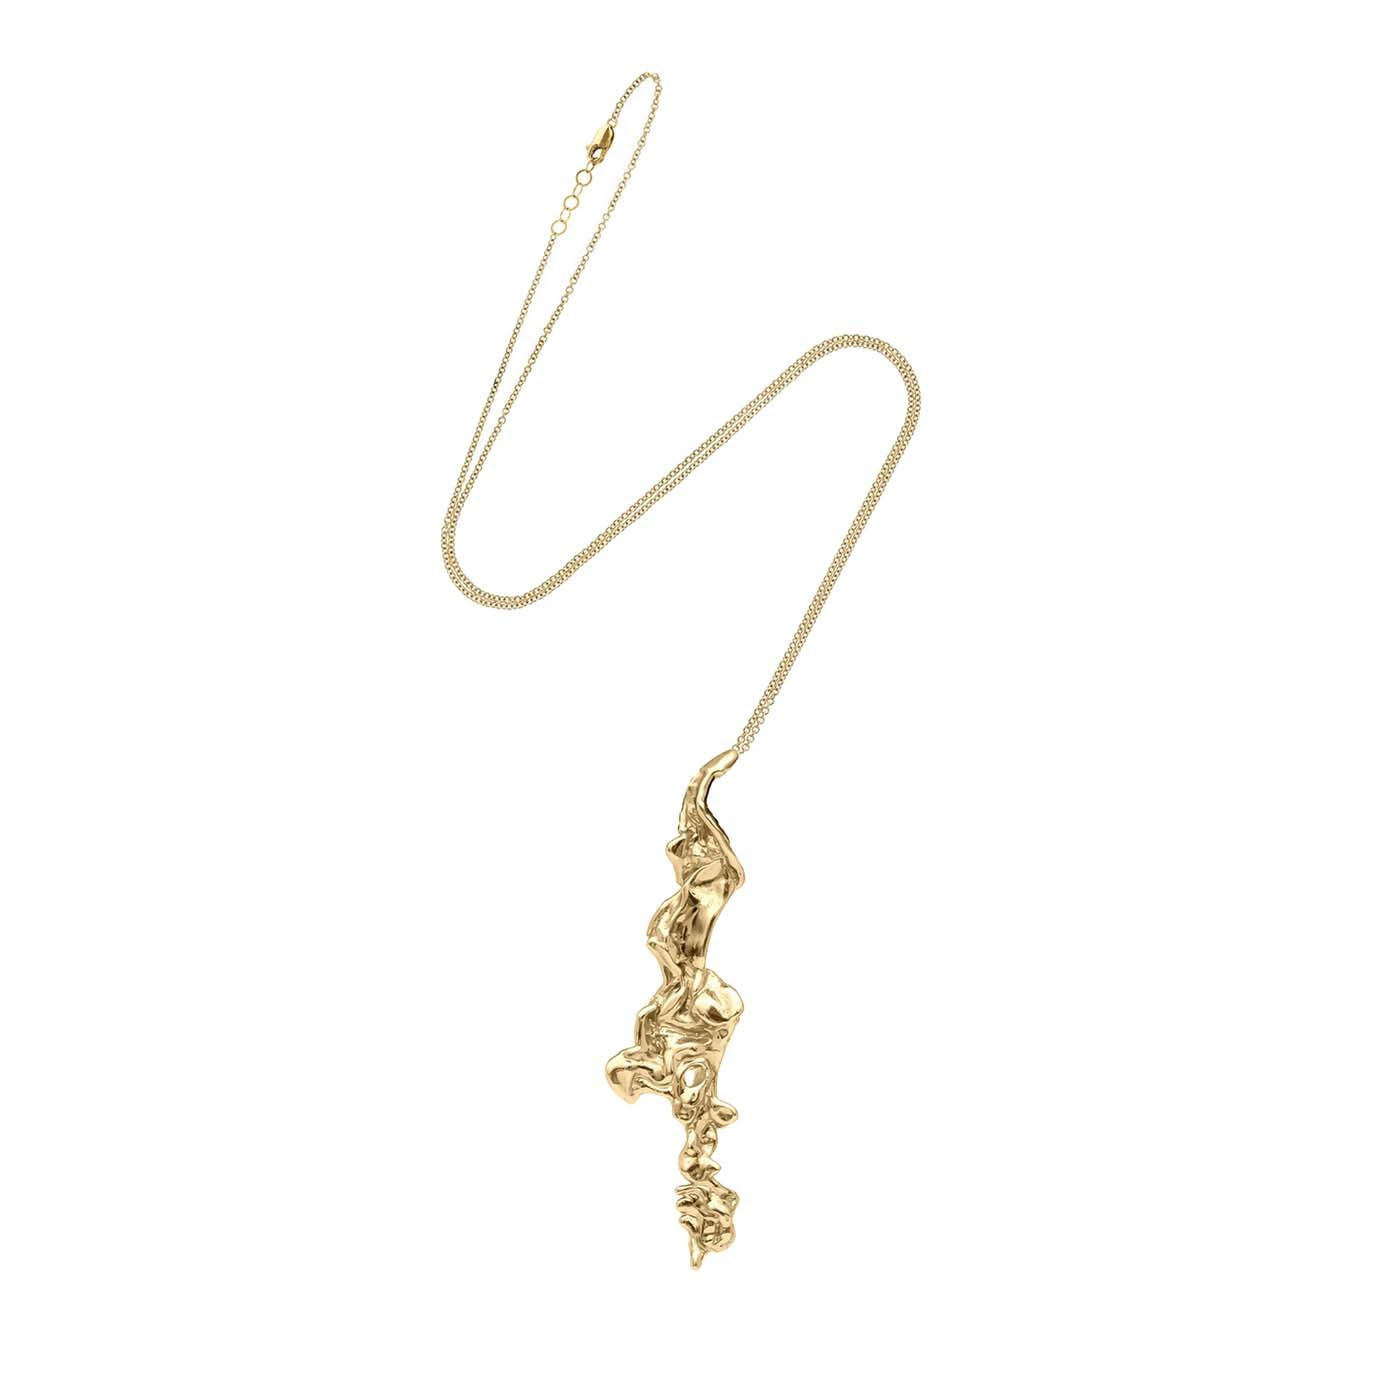 Lava Gold Necklace with Short Pendant - Noshi